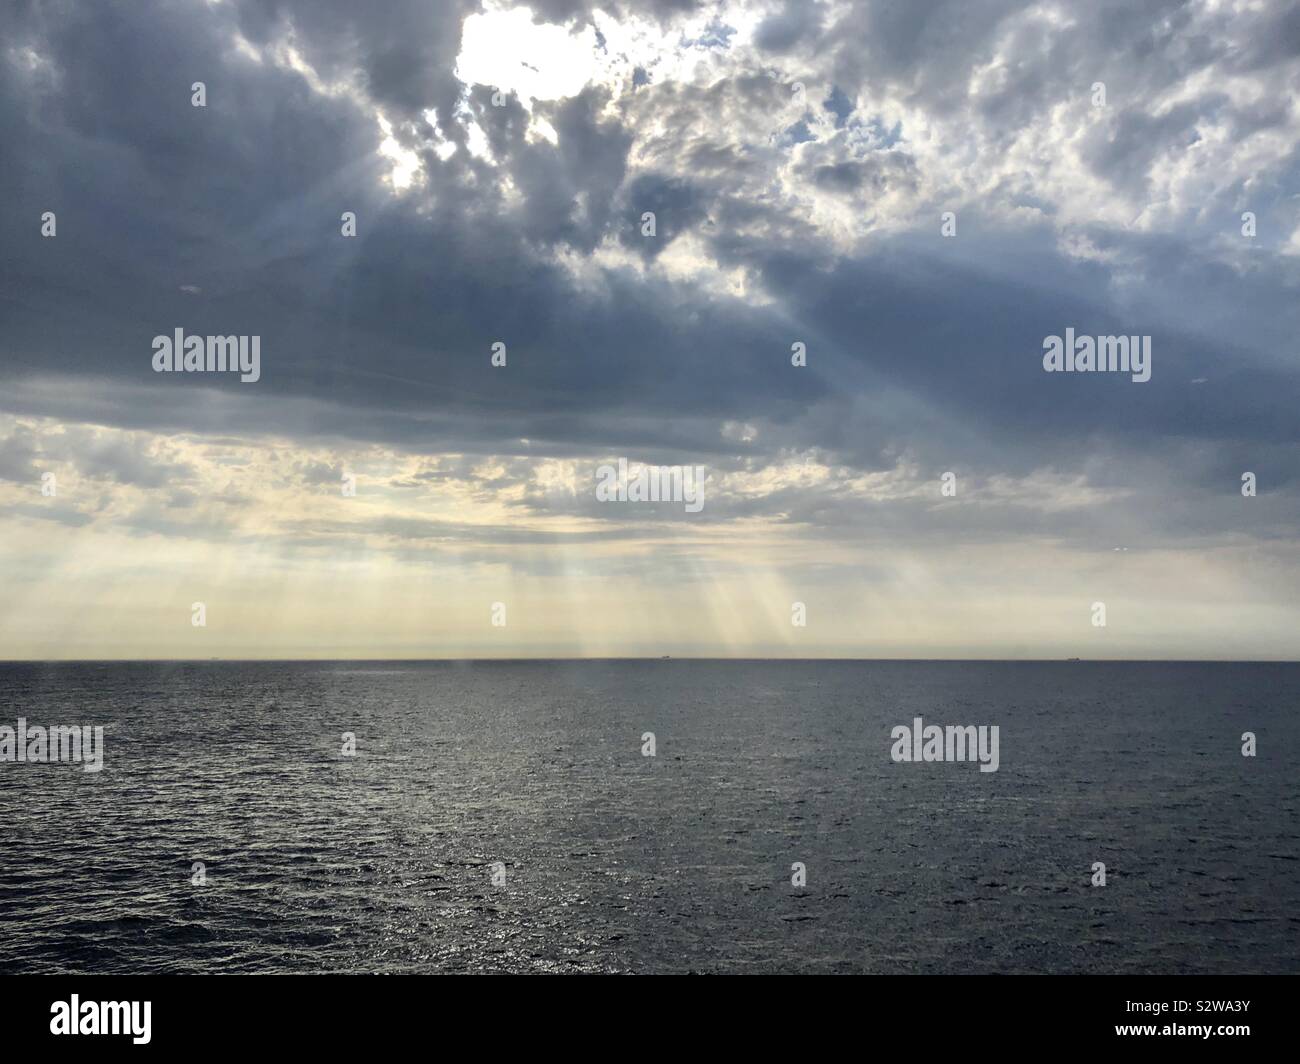 Sunlight shining through clouds over sea Stock Photo - Alamy